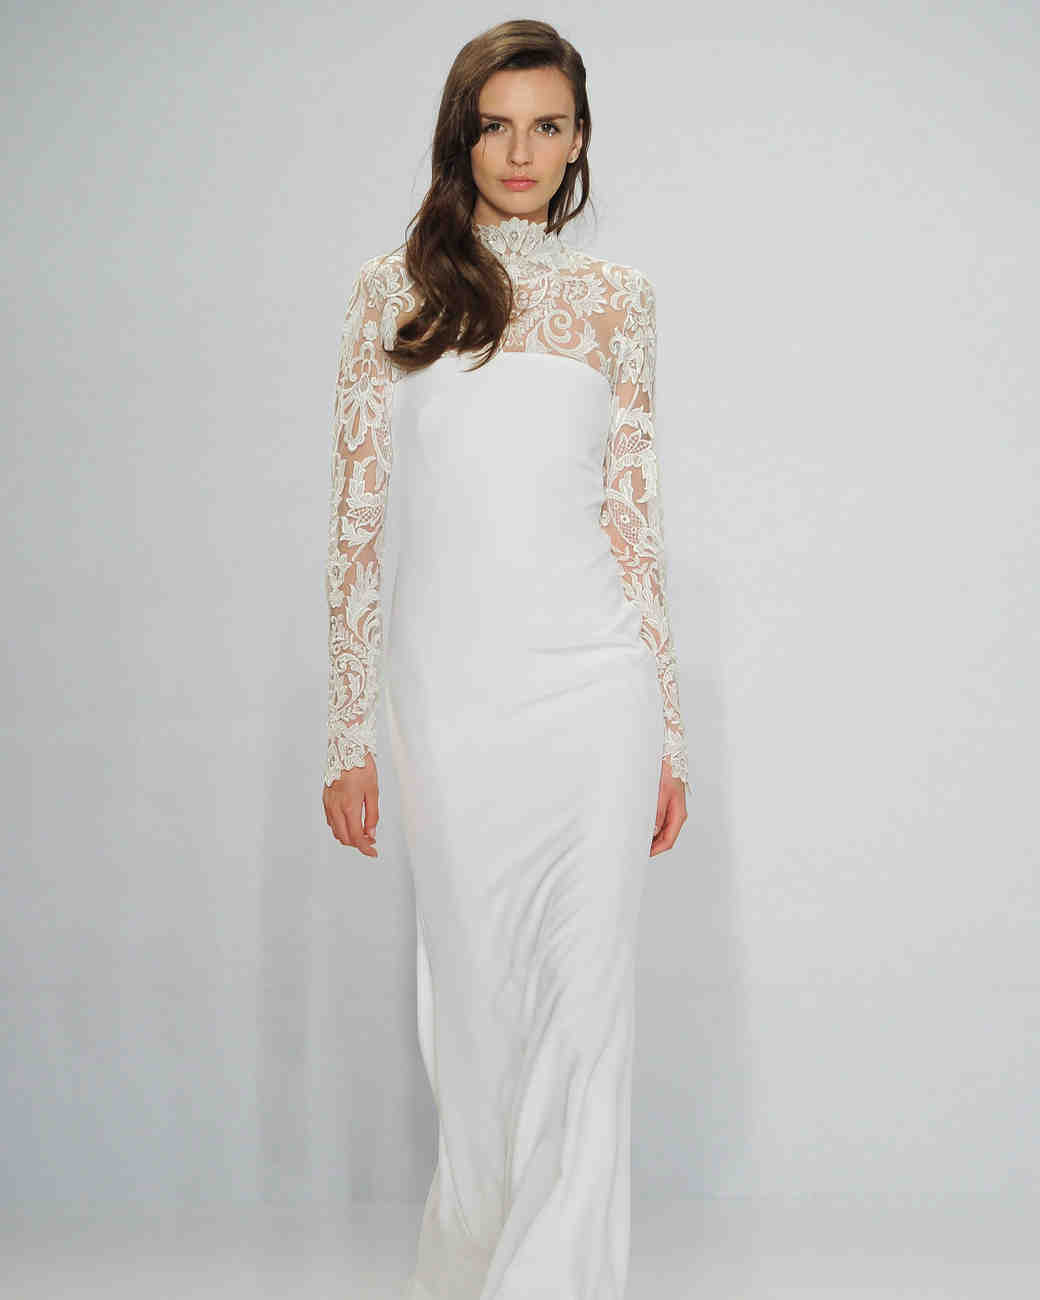 Long-Sleeve Wedding Dresses We Love | Martha Stewart Weddings